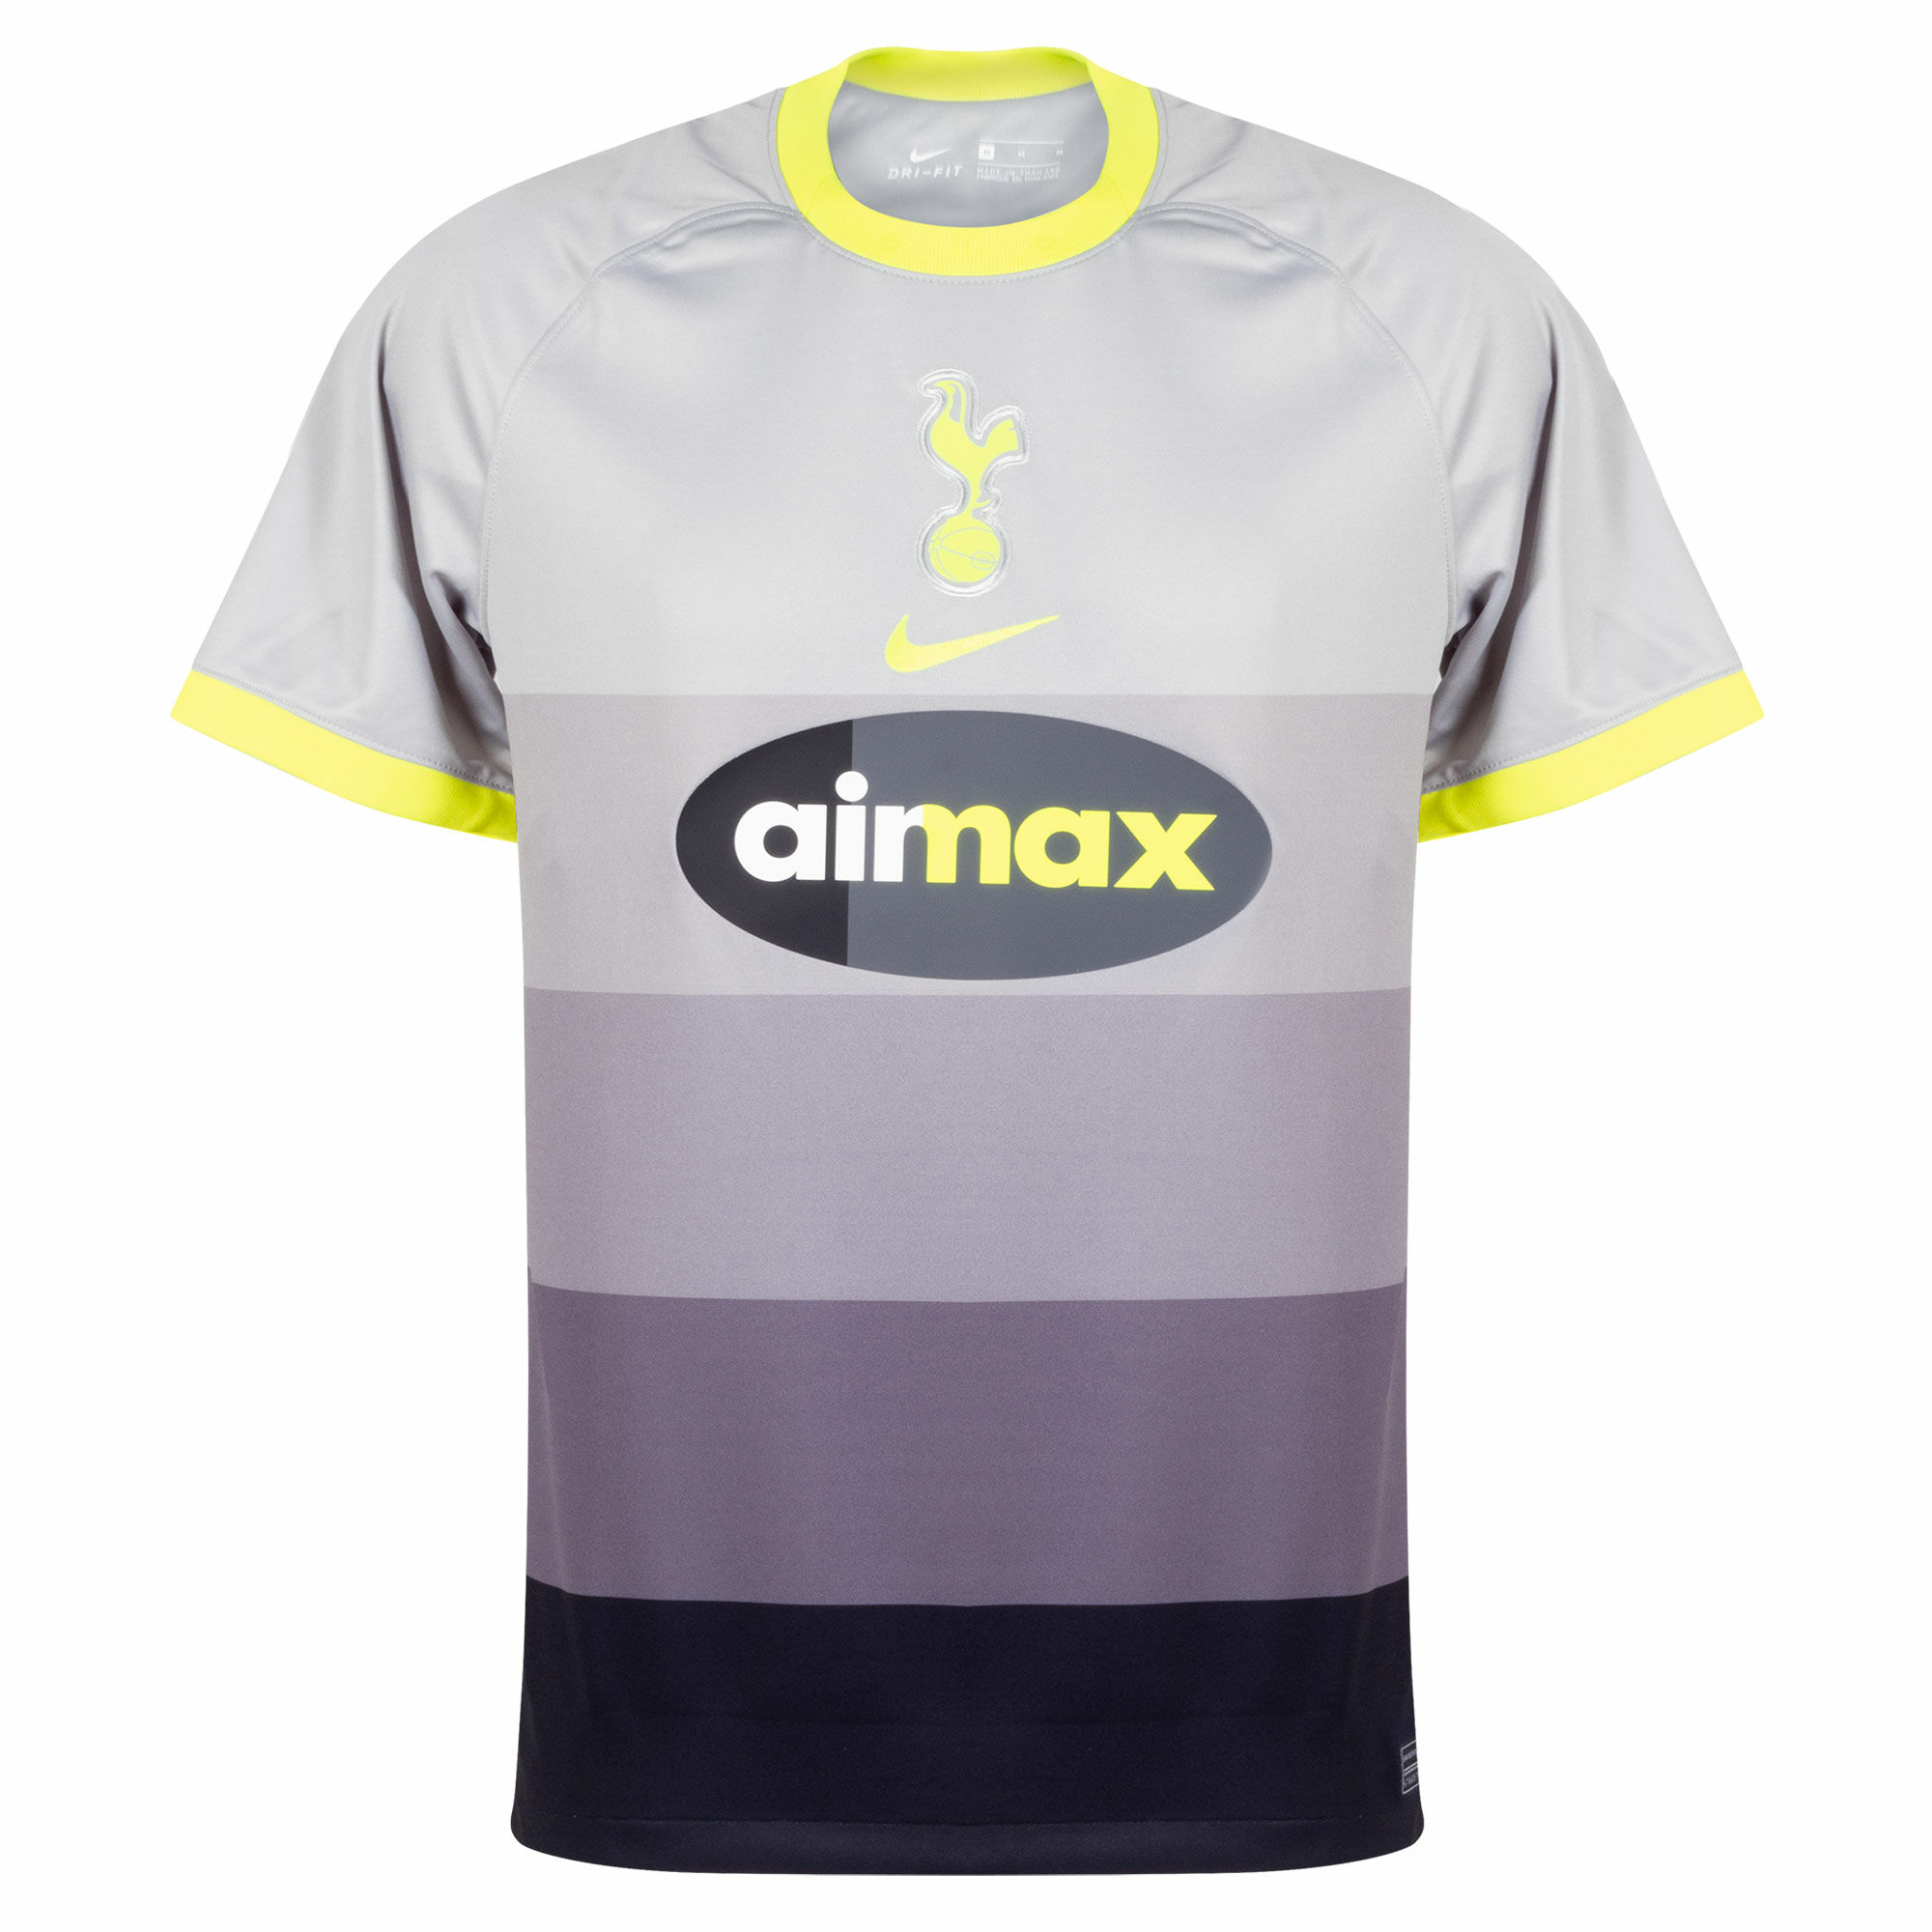 Tottenham Hotspur - Dres fotbalový "Airmax" - šedý, sezóna 2020/21